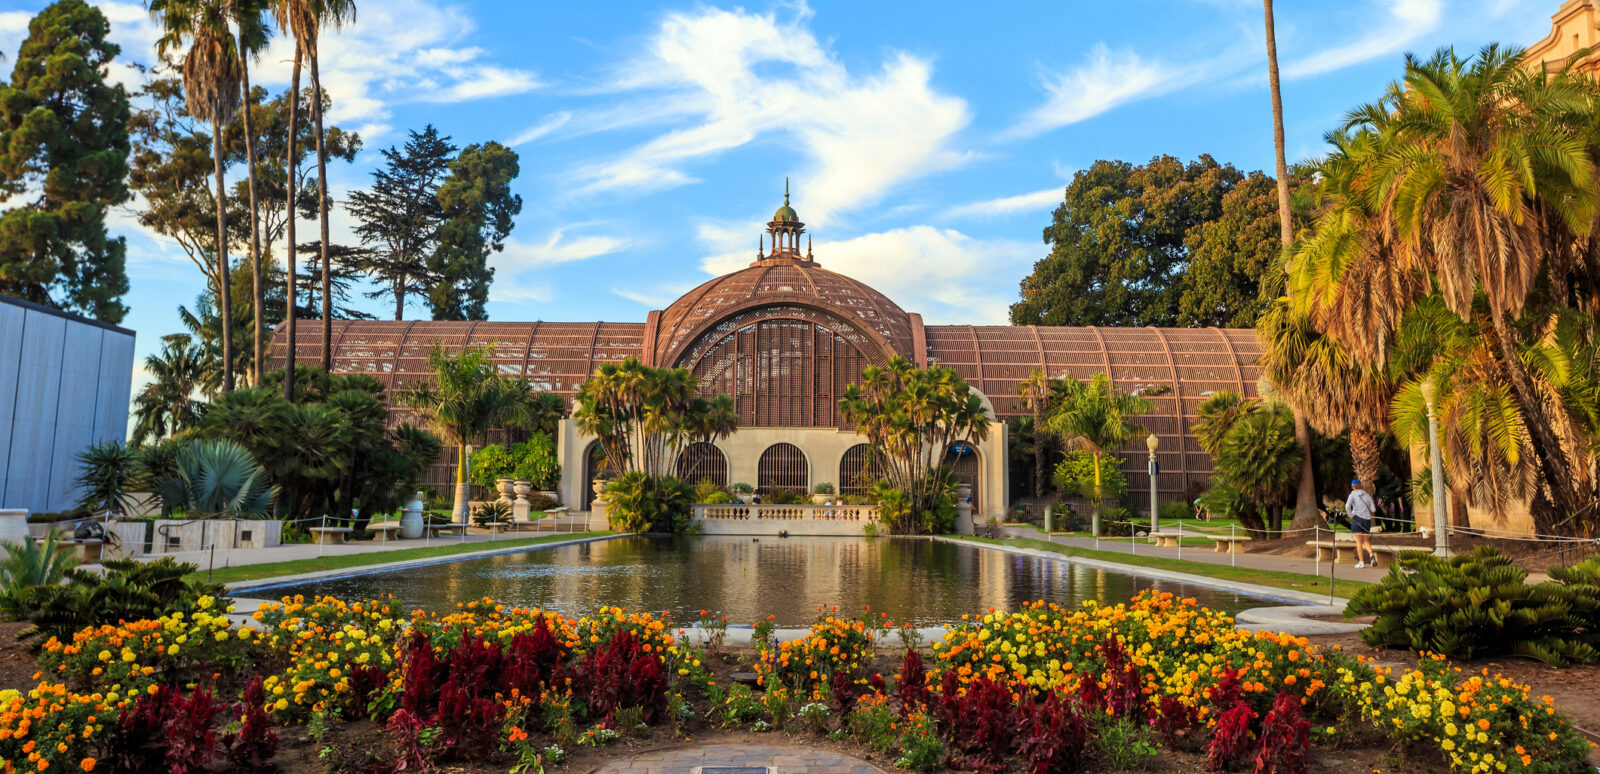 Balboa park Botanical building and pond San Diego, California USA